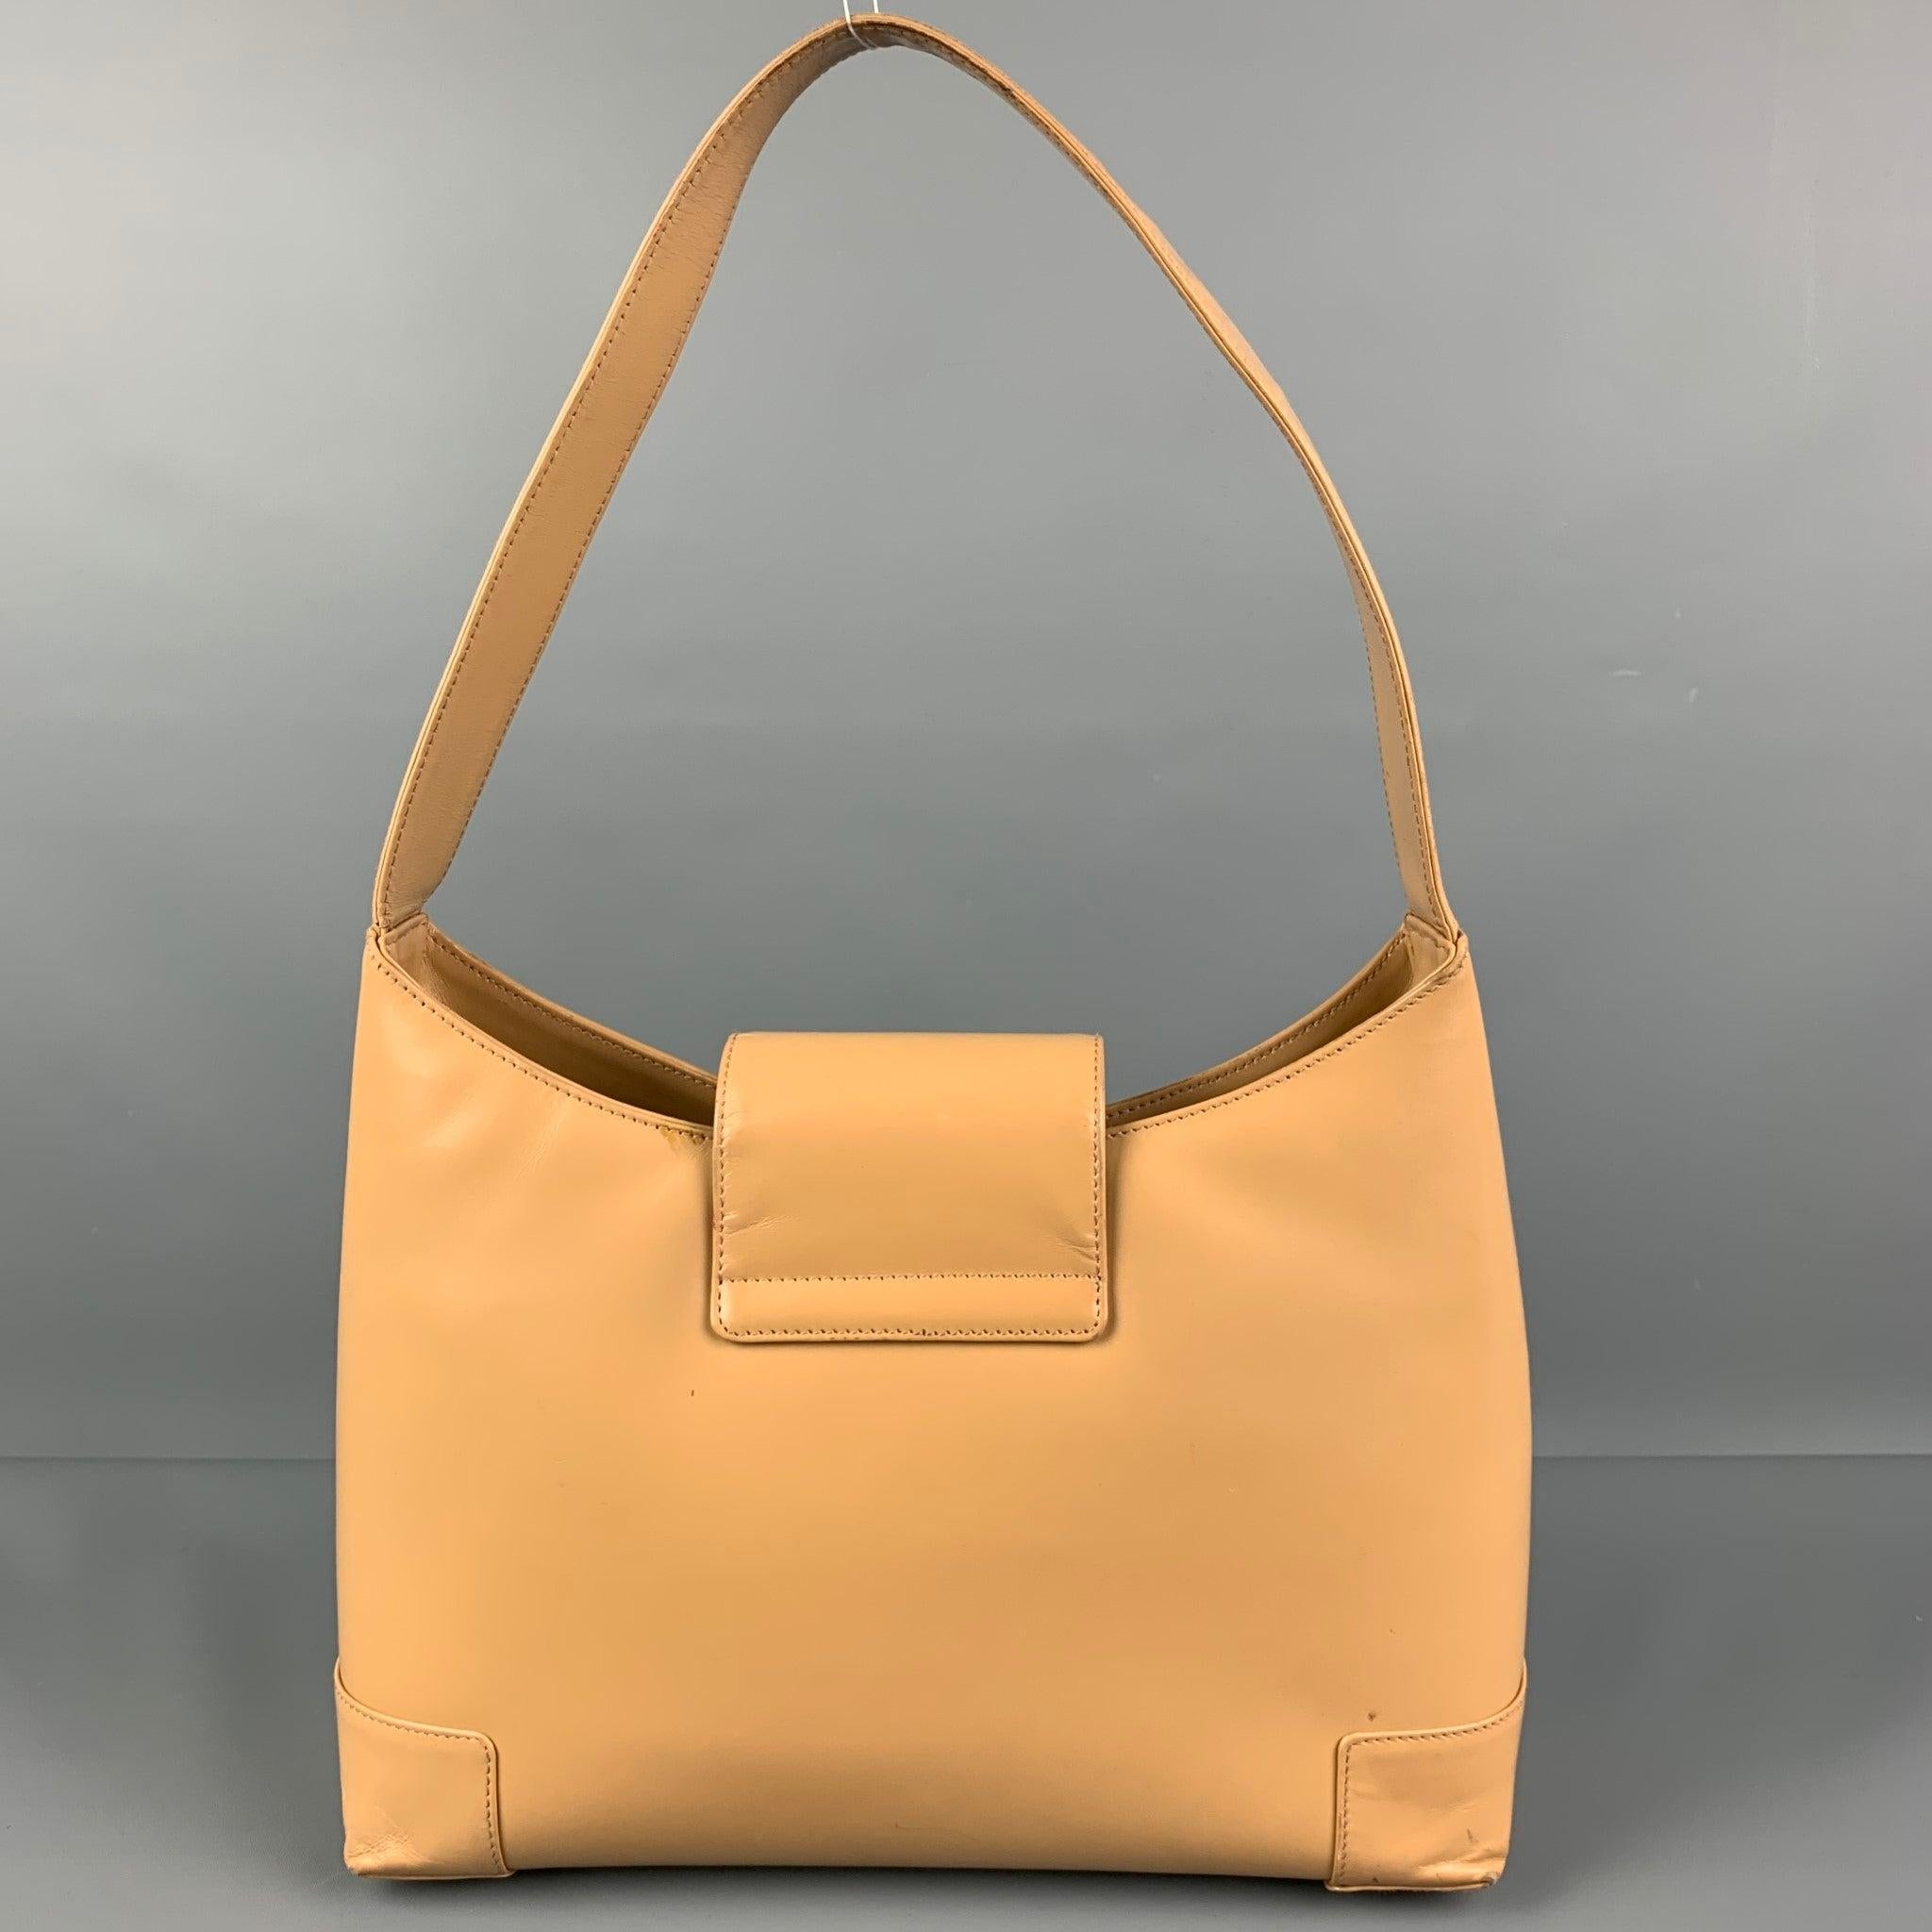 LAMBERTSON TRUEX Beige Leather Shoulder Bag Handbag In Good Condition For Sale In San Francisco, CA